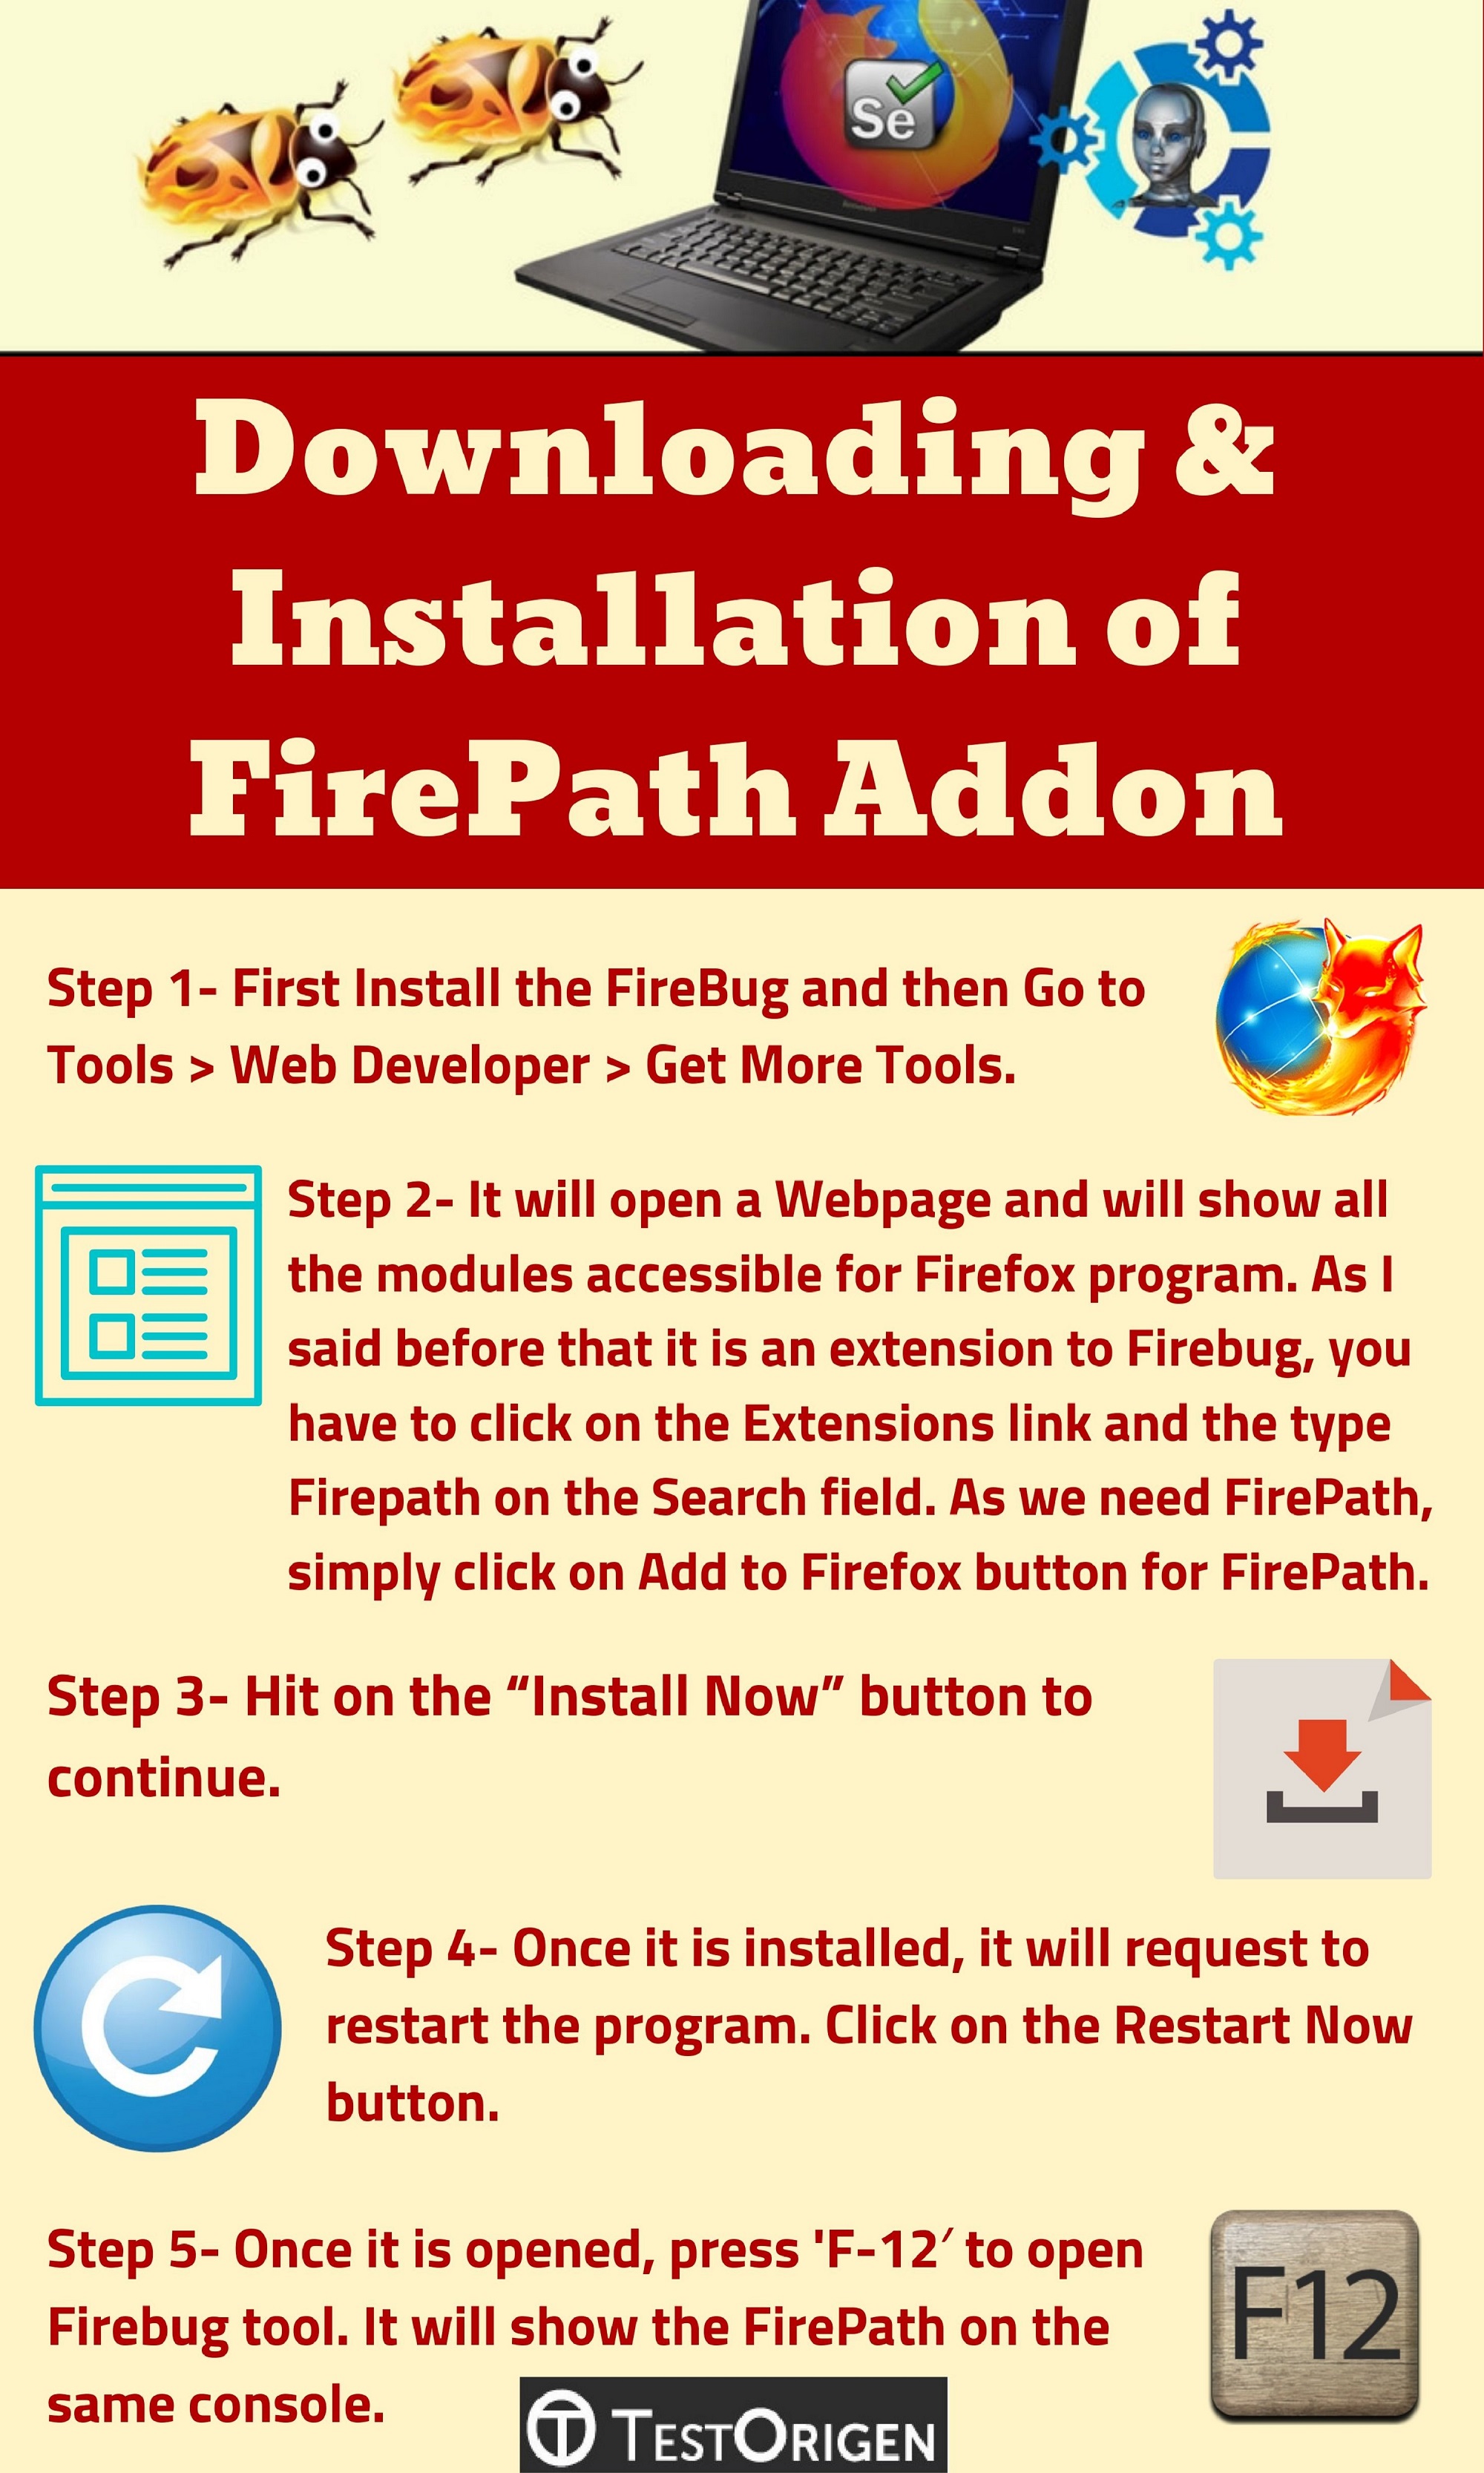 Downloading & Installation of FirePath Addon